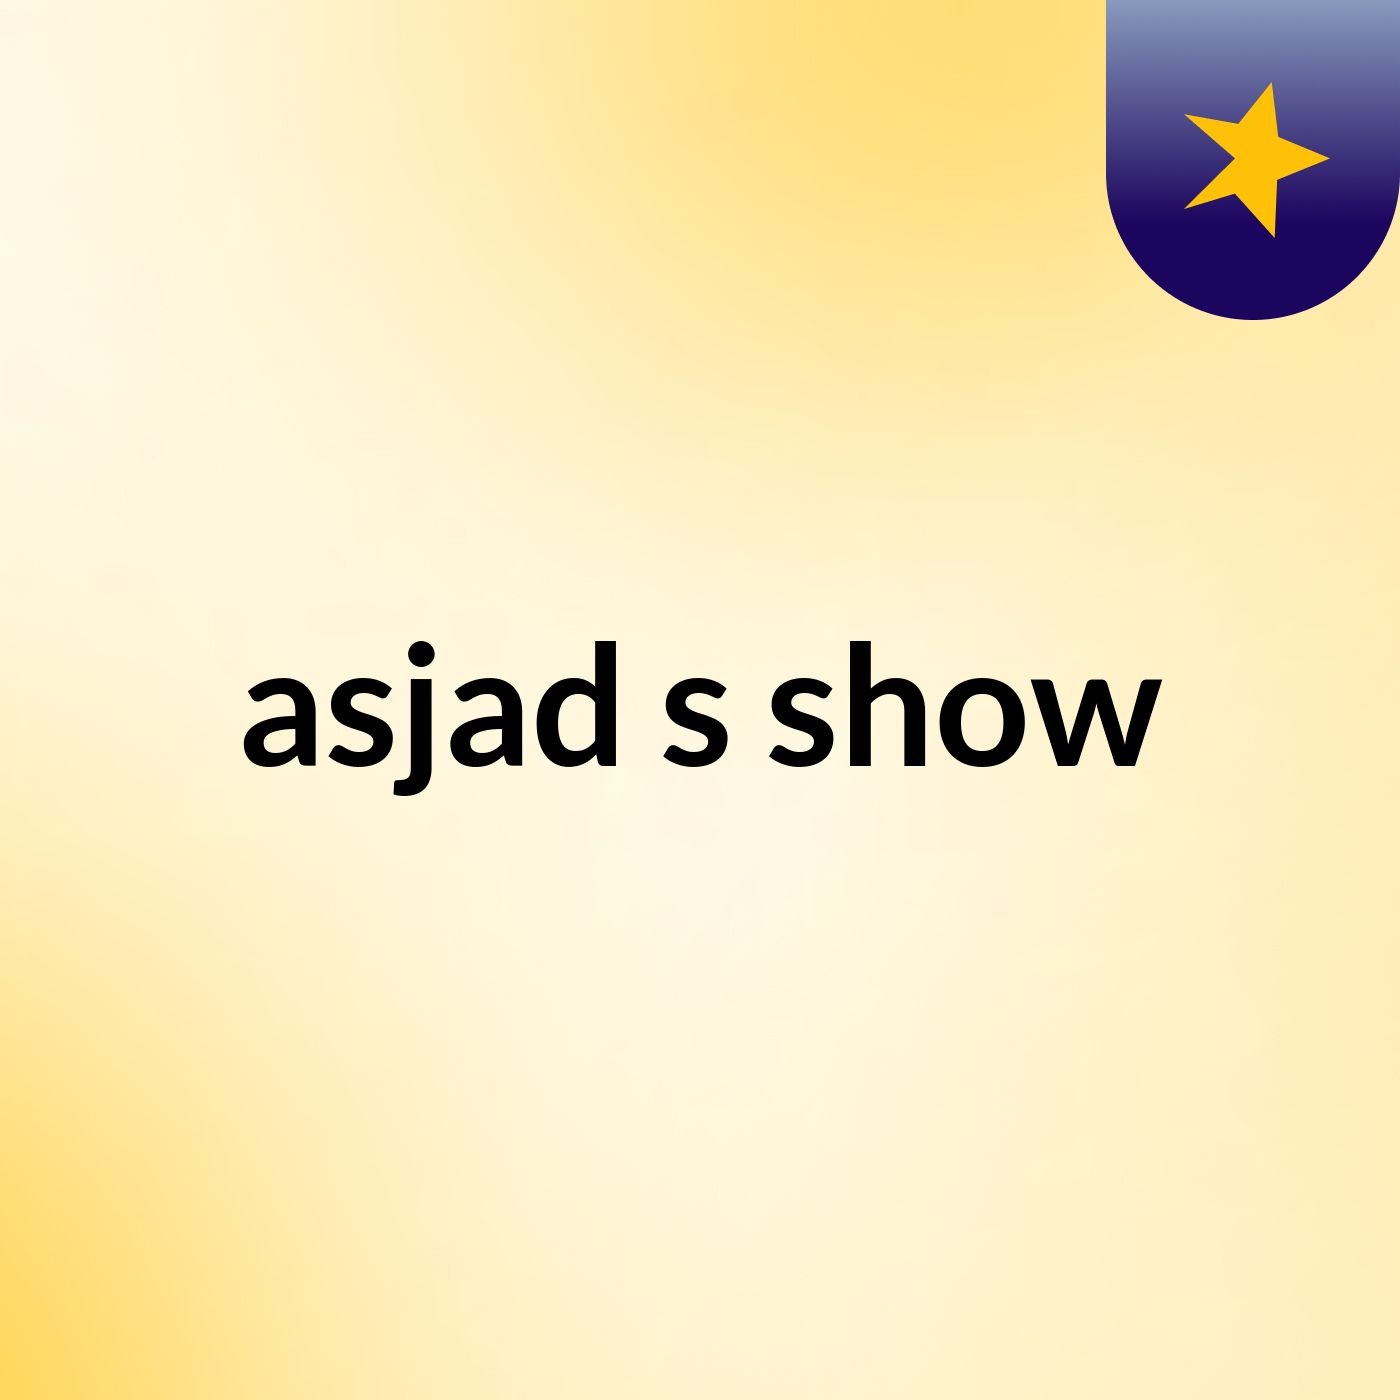 asjad's show